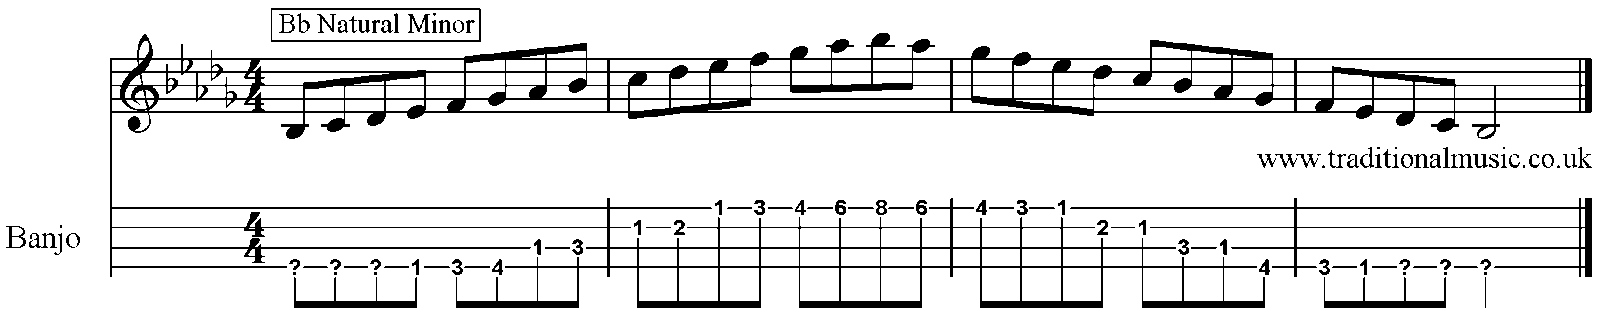 Minor Scales for Banjo Bb 